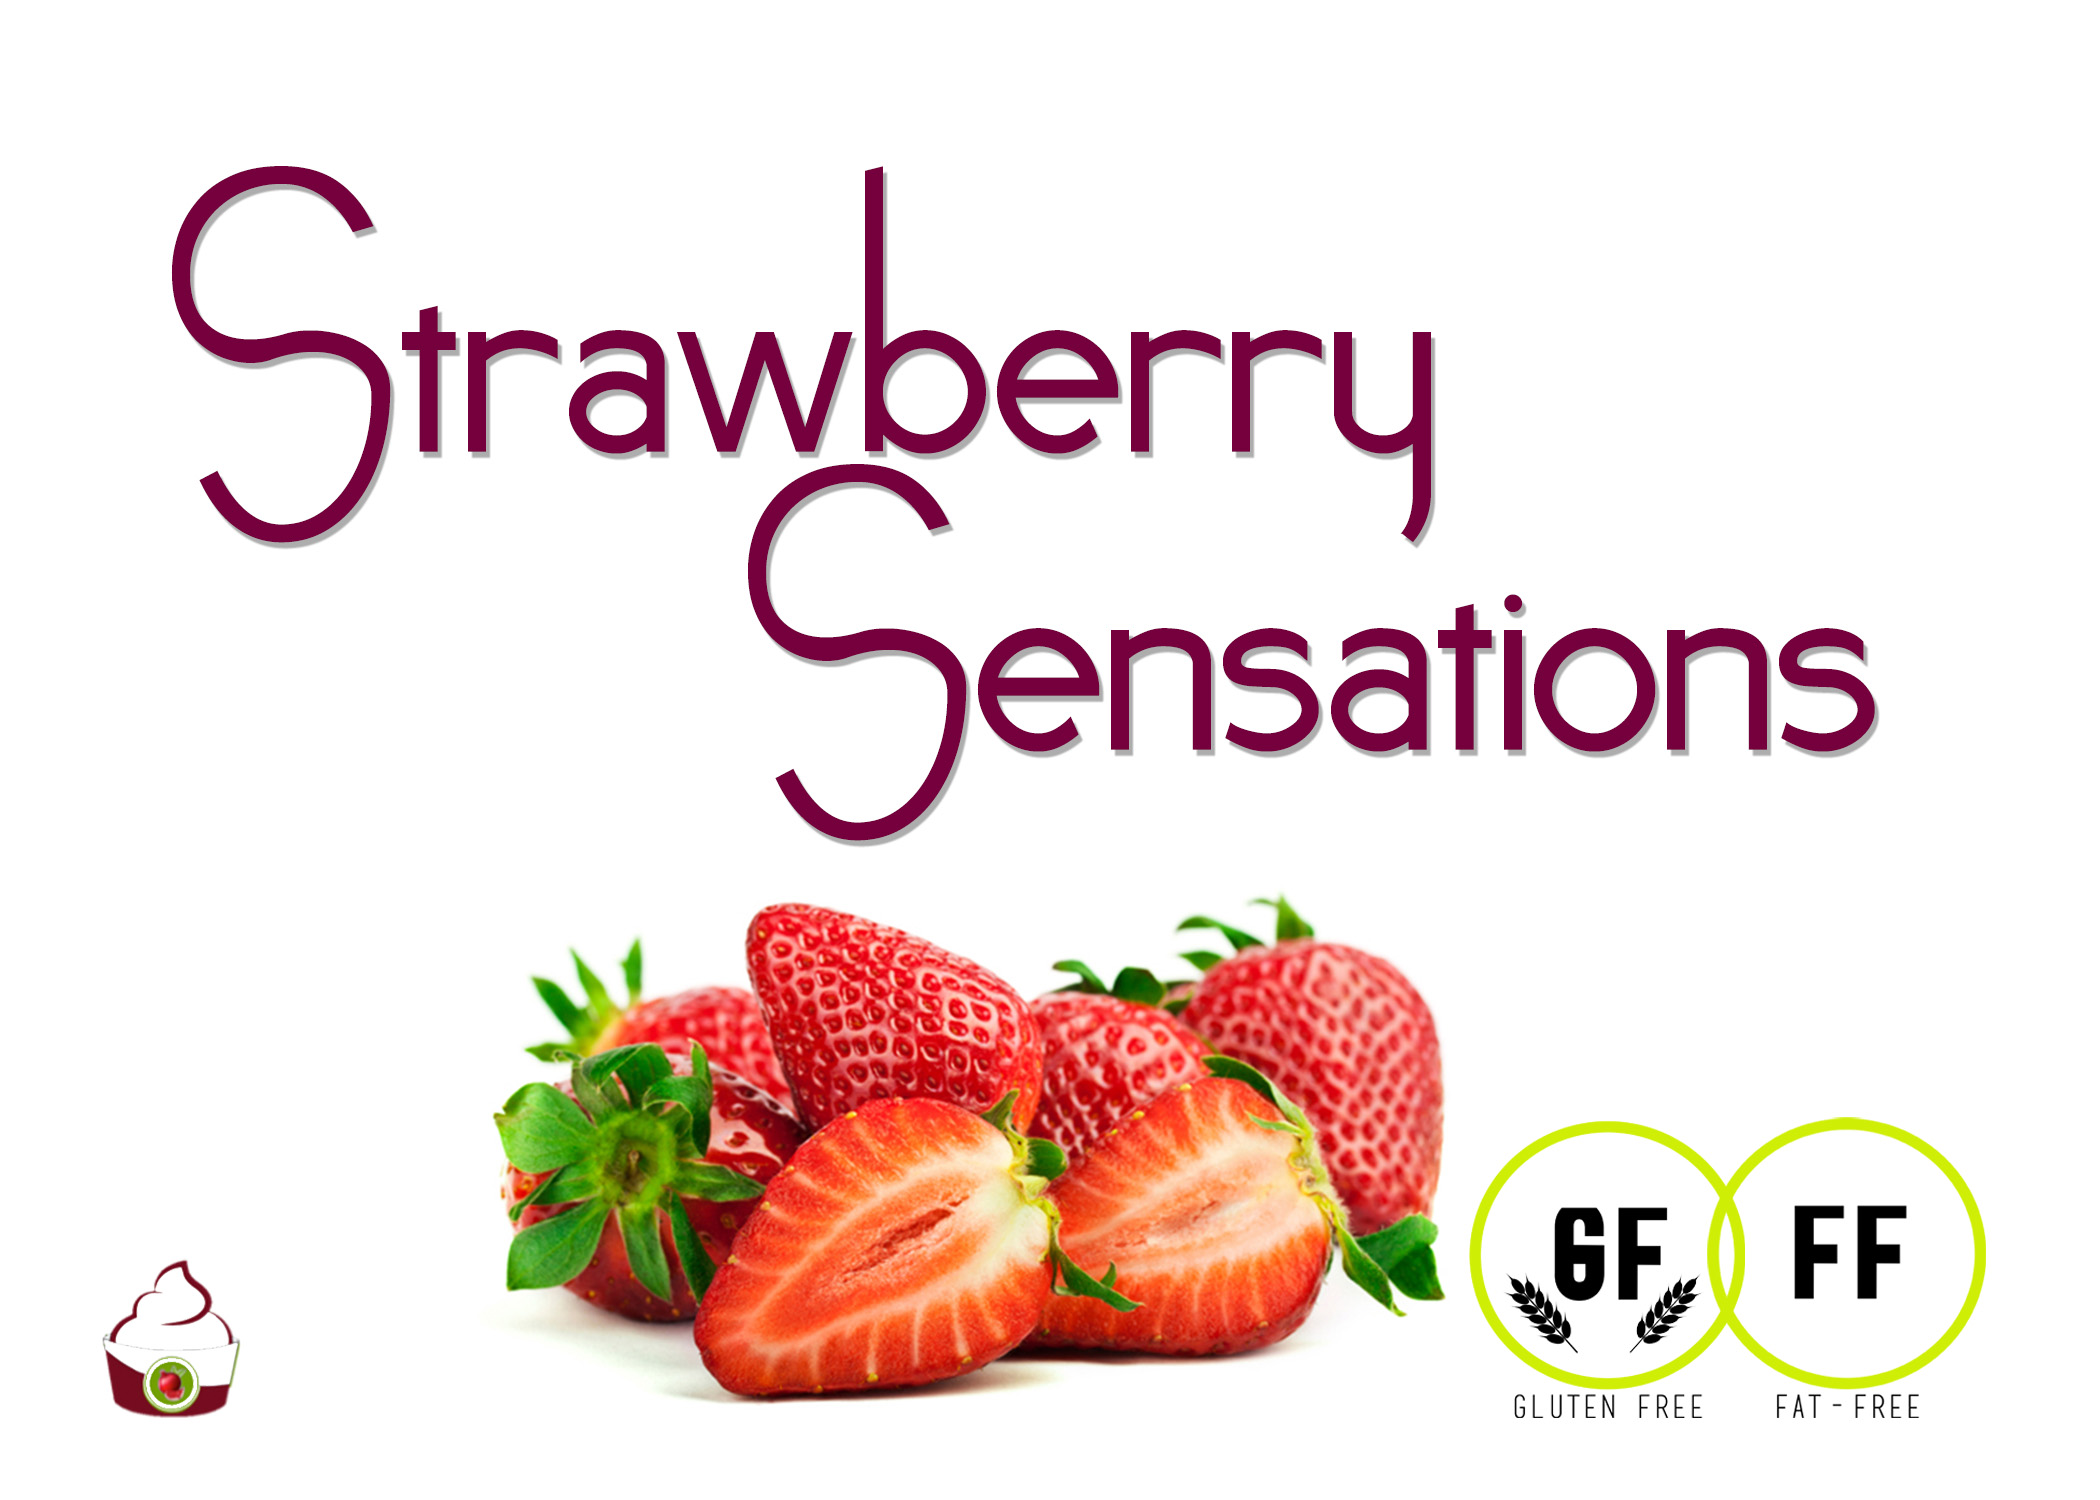 strawberry sensations.jpg